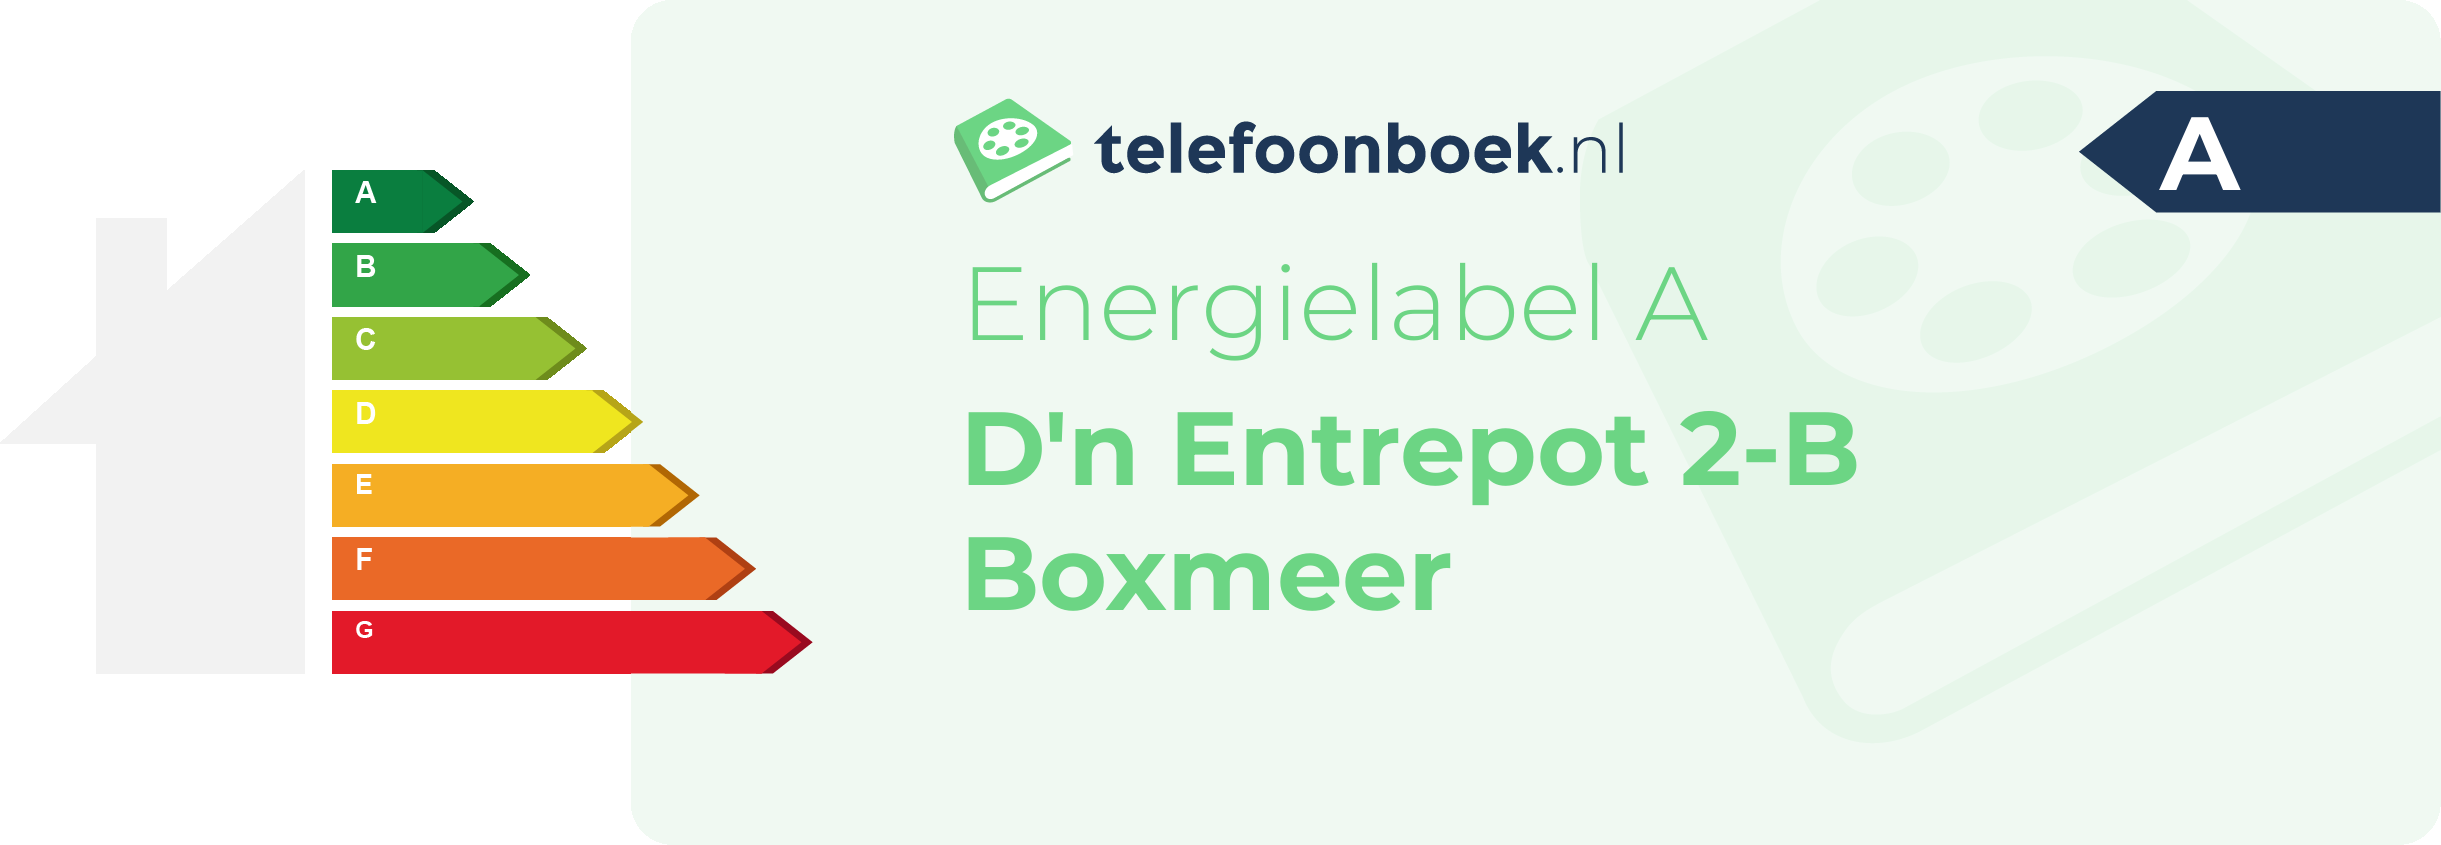 Energielabel D'n Entrepot 2-B Boxmeer